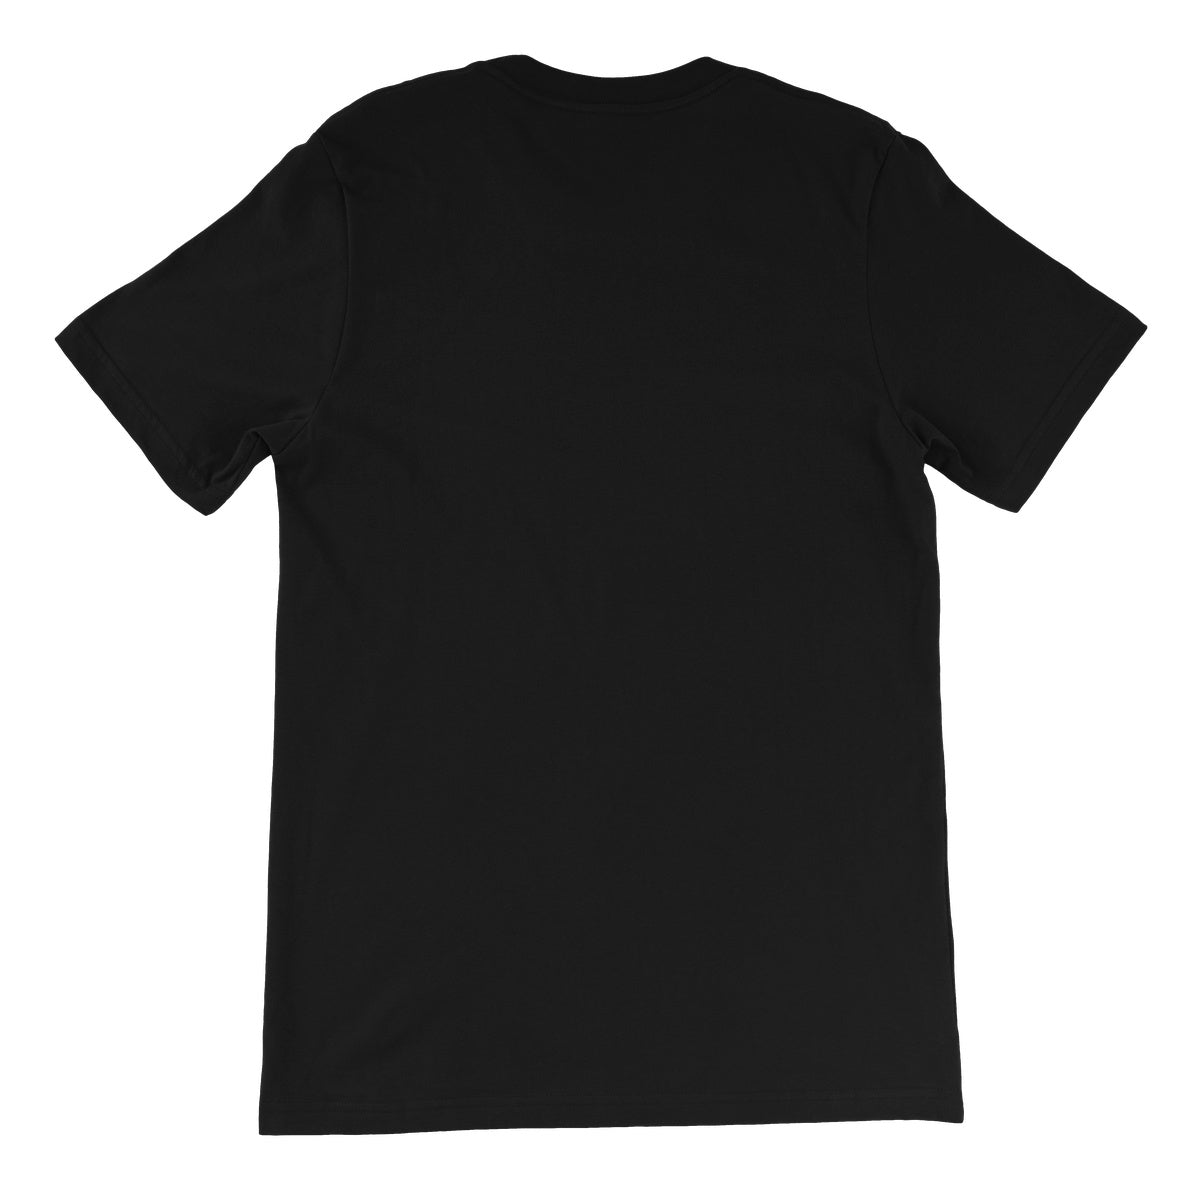 TNT Extreme Wrestling Cross Unisex Short Sleeve T-Shirt